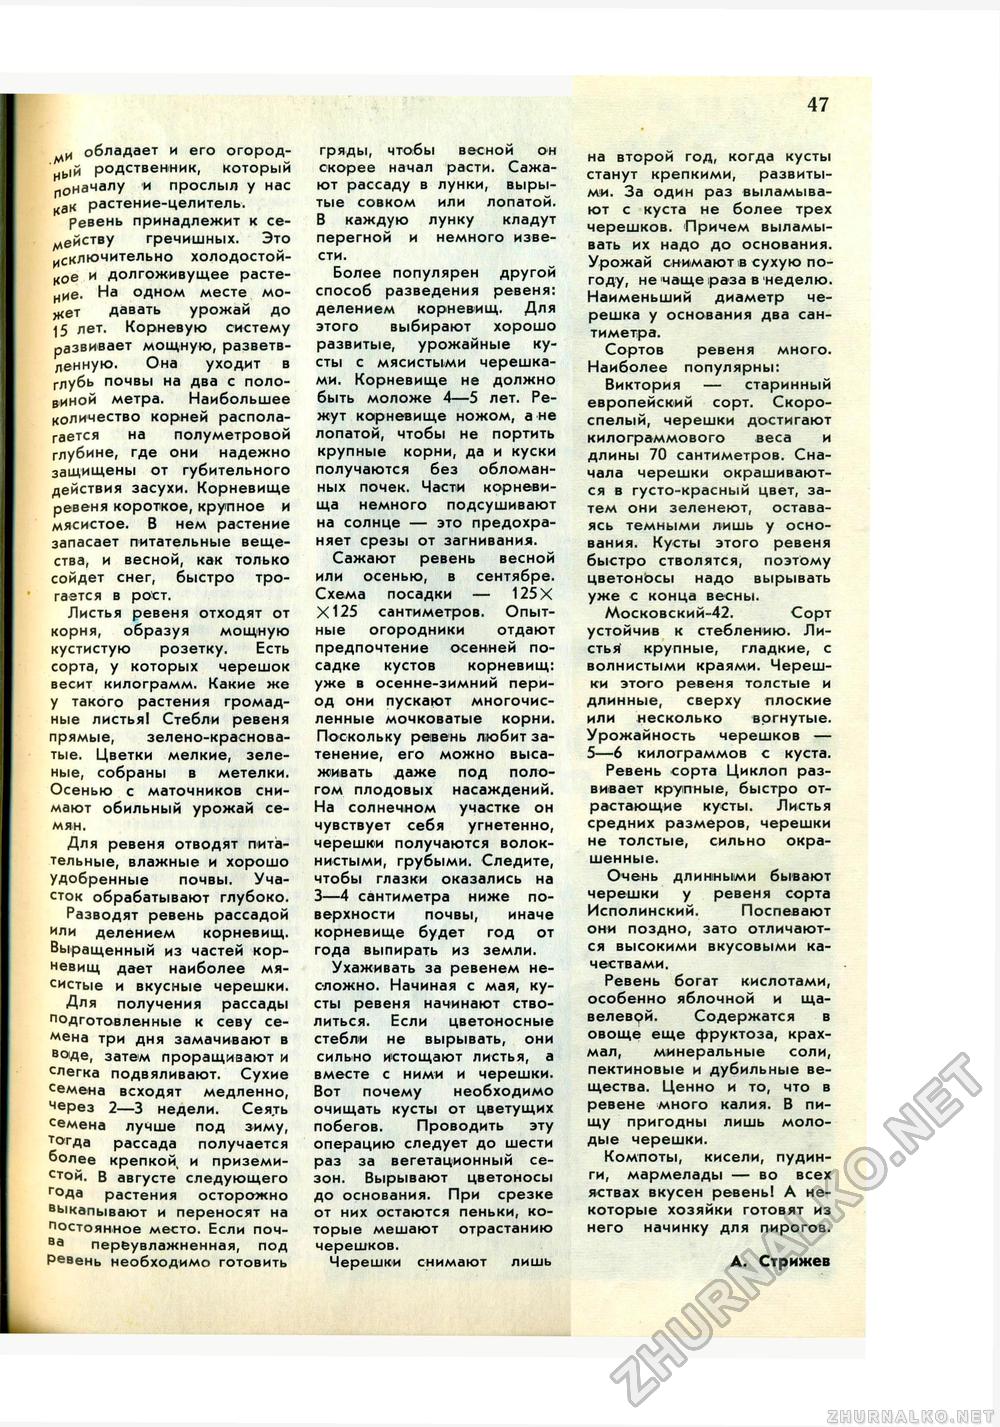 Юный Натуралист 1977-02, страница 50